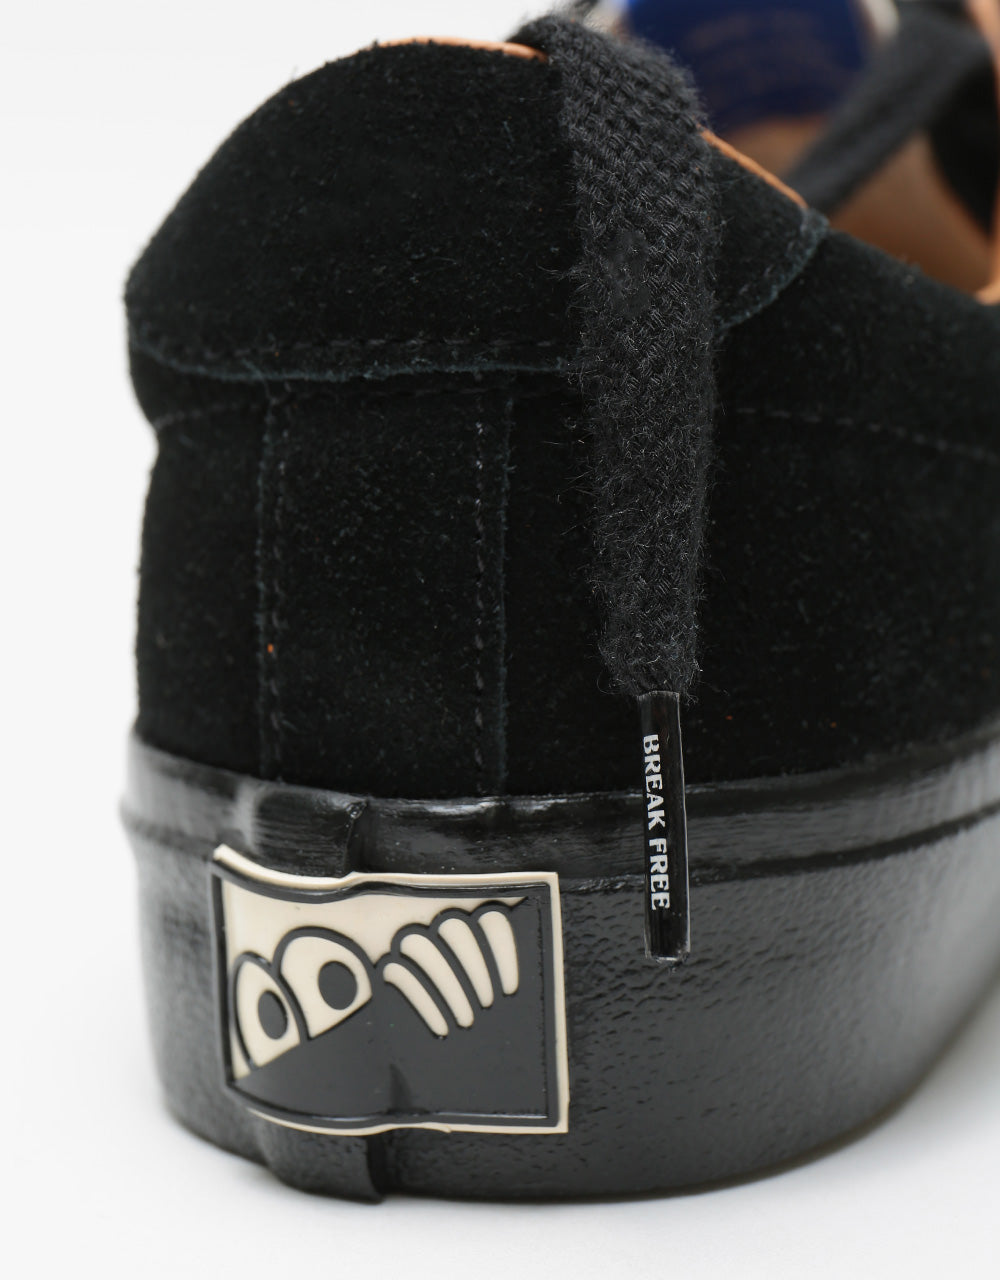 Last Resort AB VM001 Suede Lo Skate Shoes - Black/Black